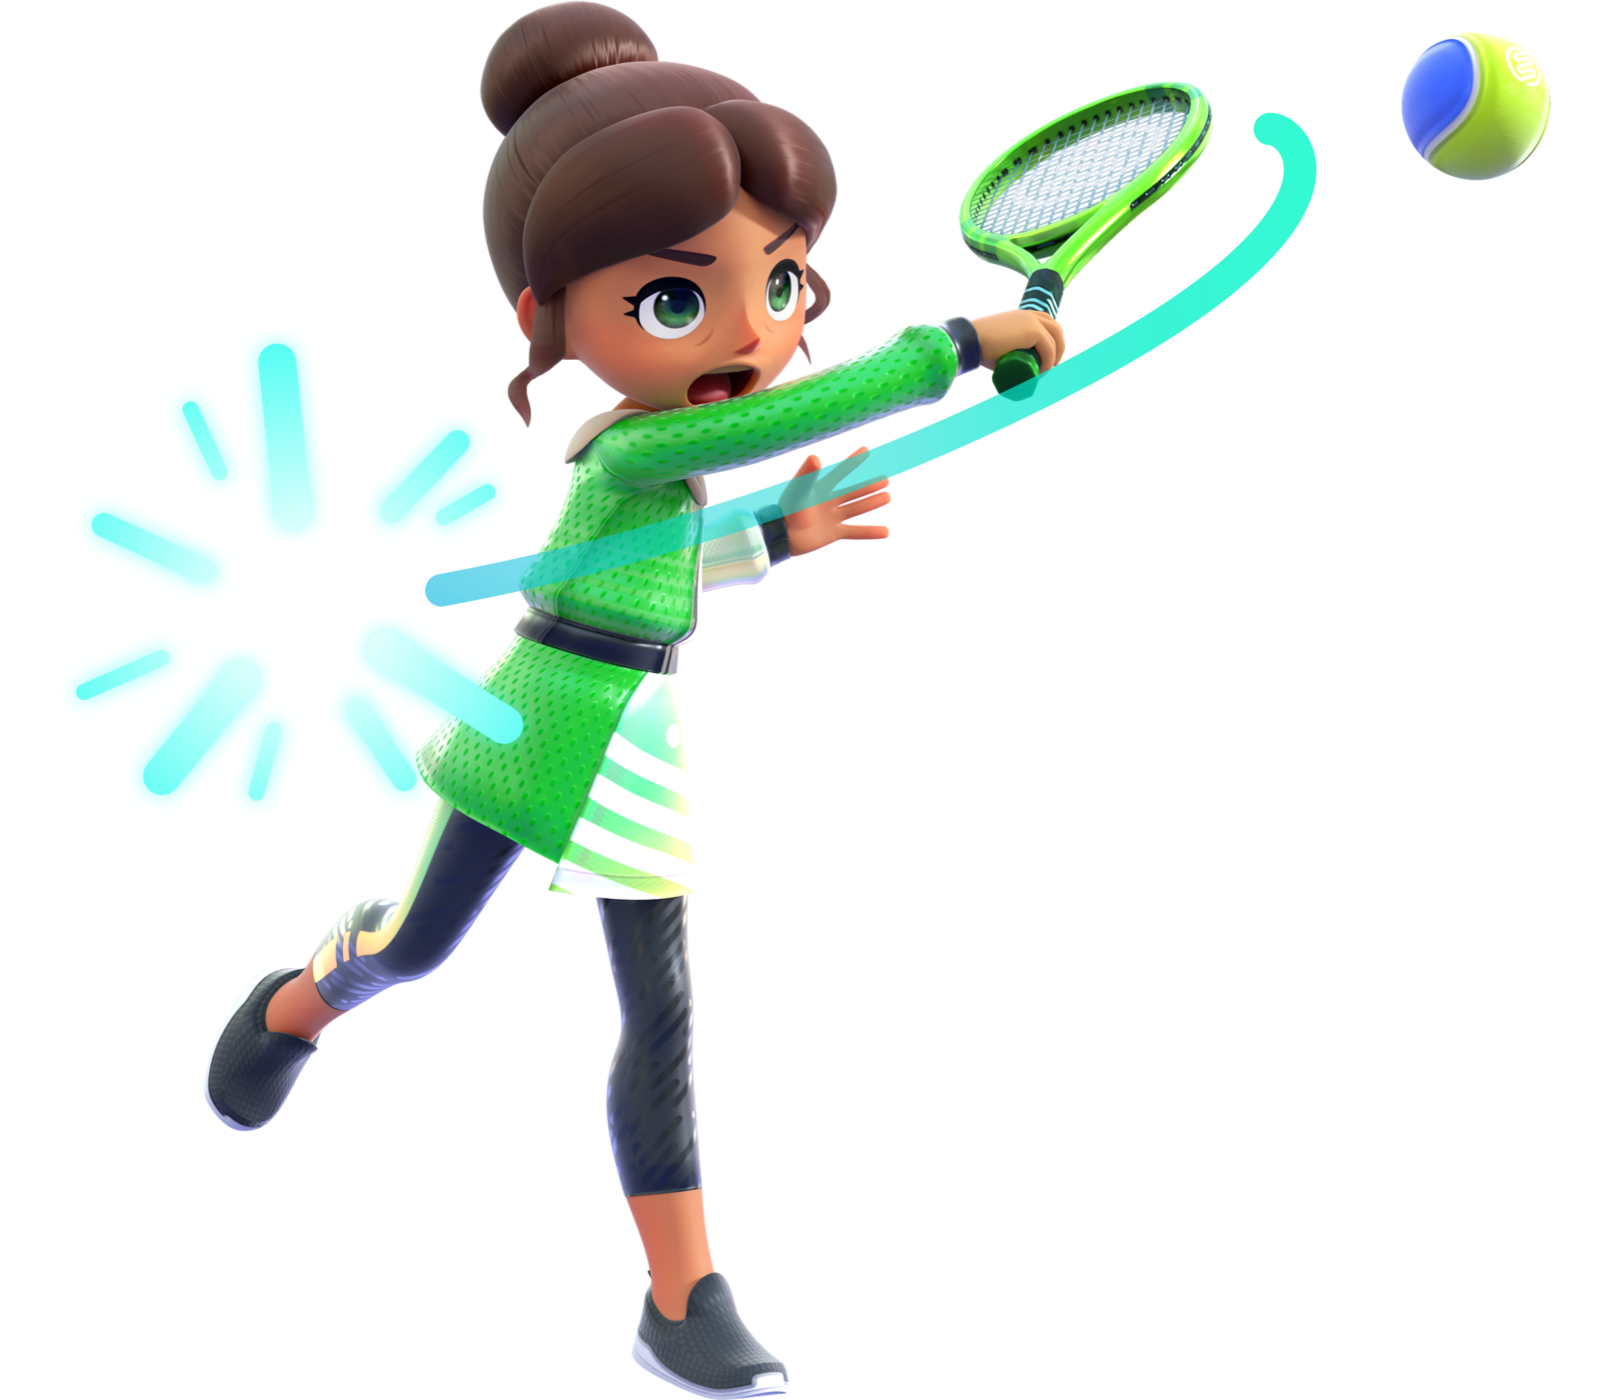 Нинтендо свитч Sport. Нинтендо свитч Спортс. Nintendo Switch Tennis. Игра Nintendo Switch Sports. Nintendo switch sport